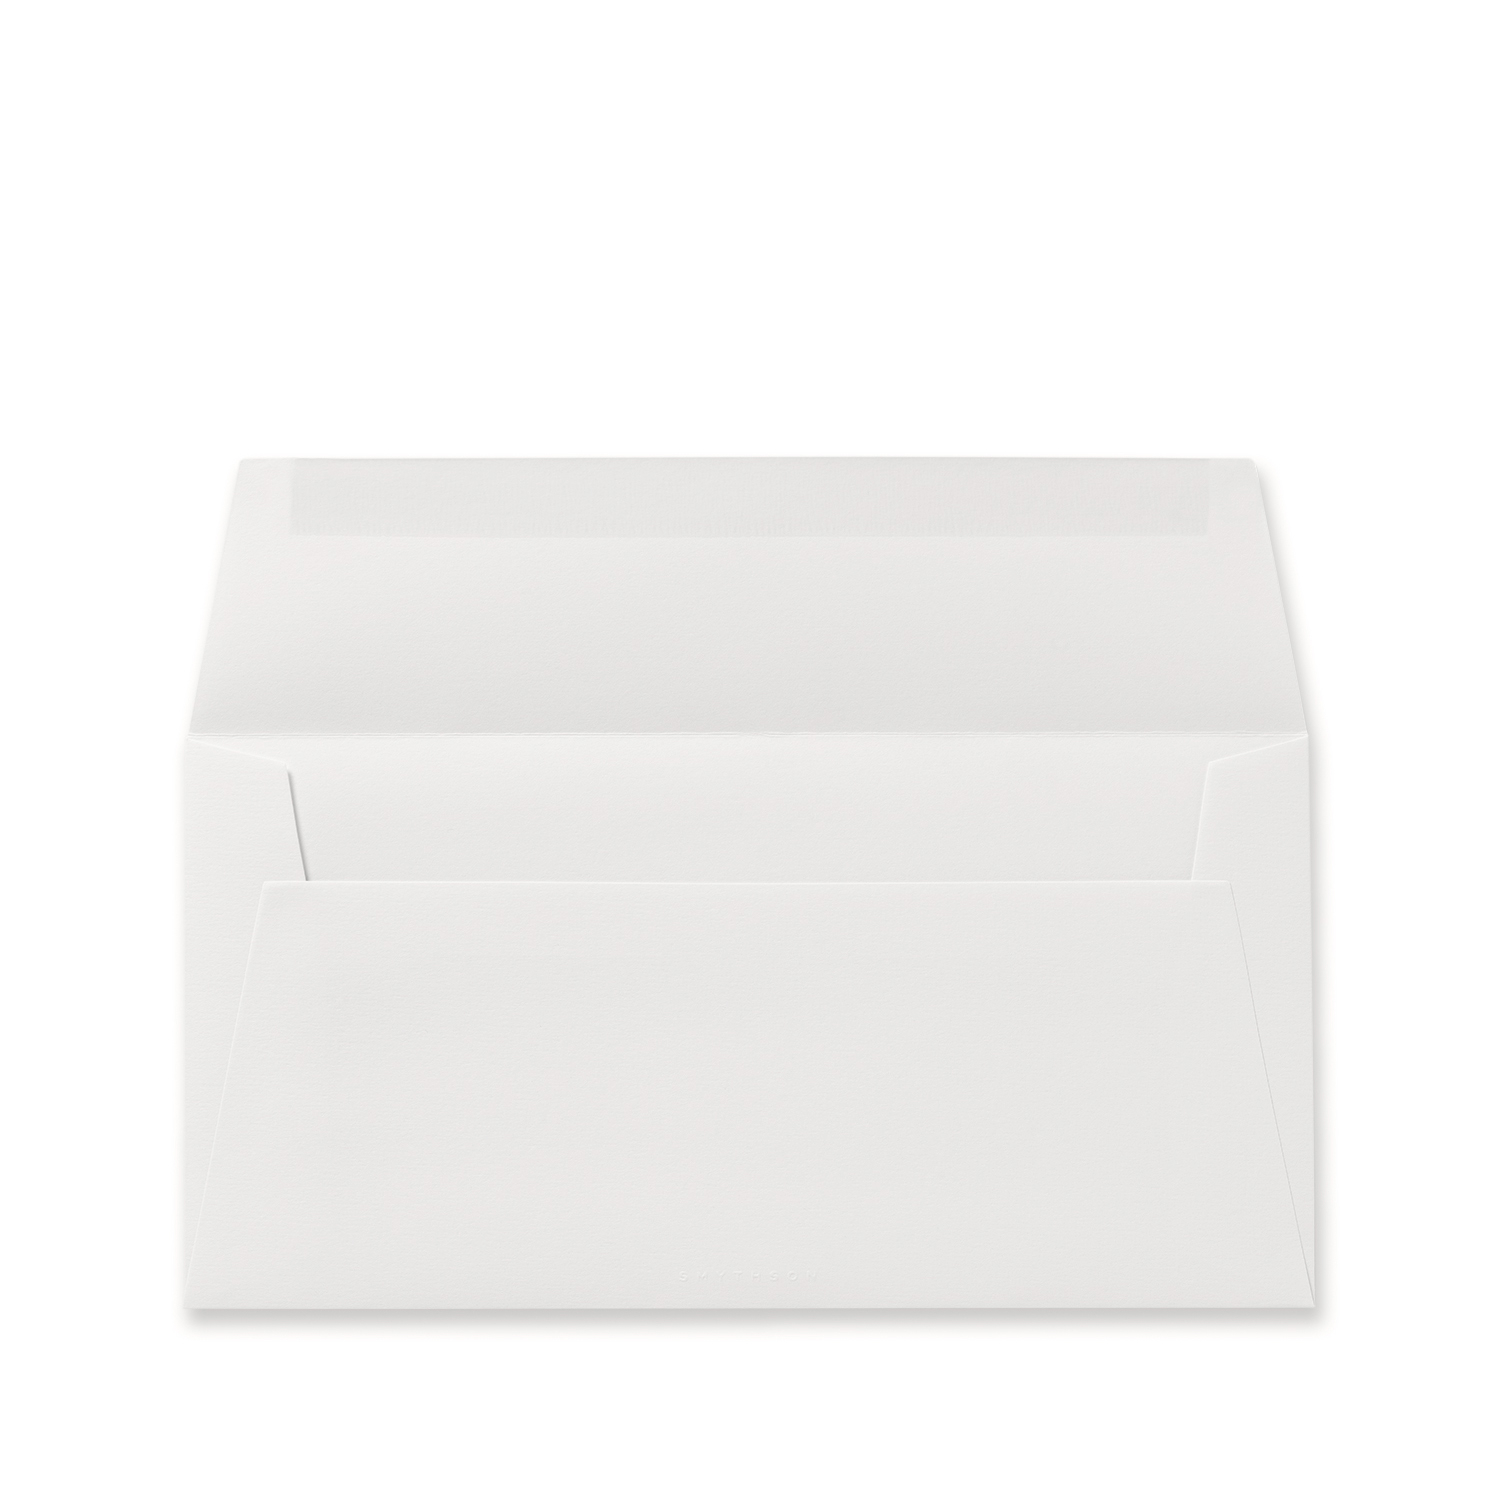 Smythson A4 Envelopes In White Laid